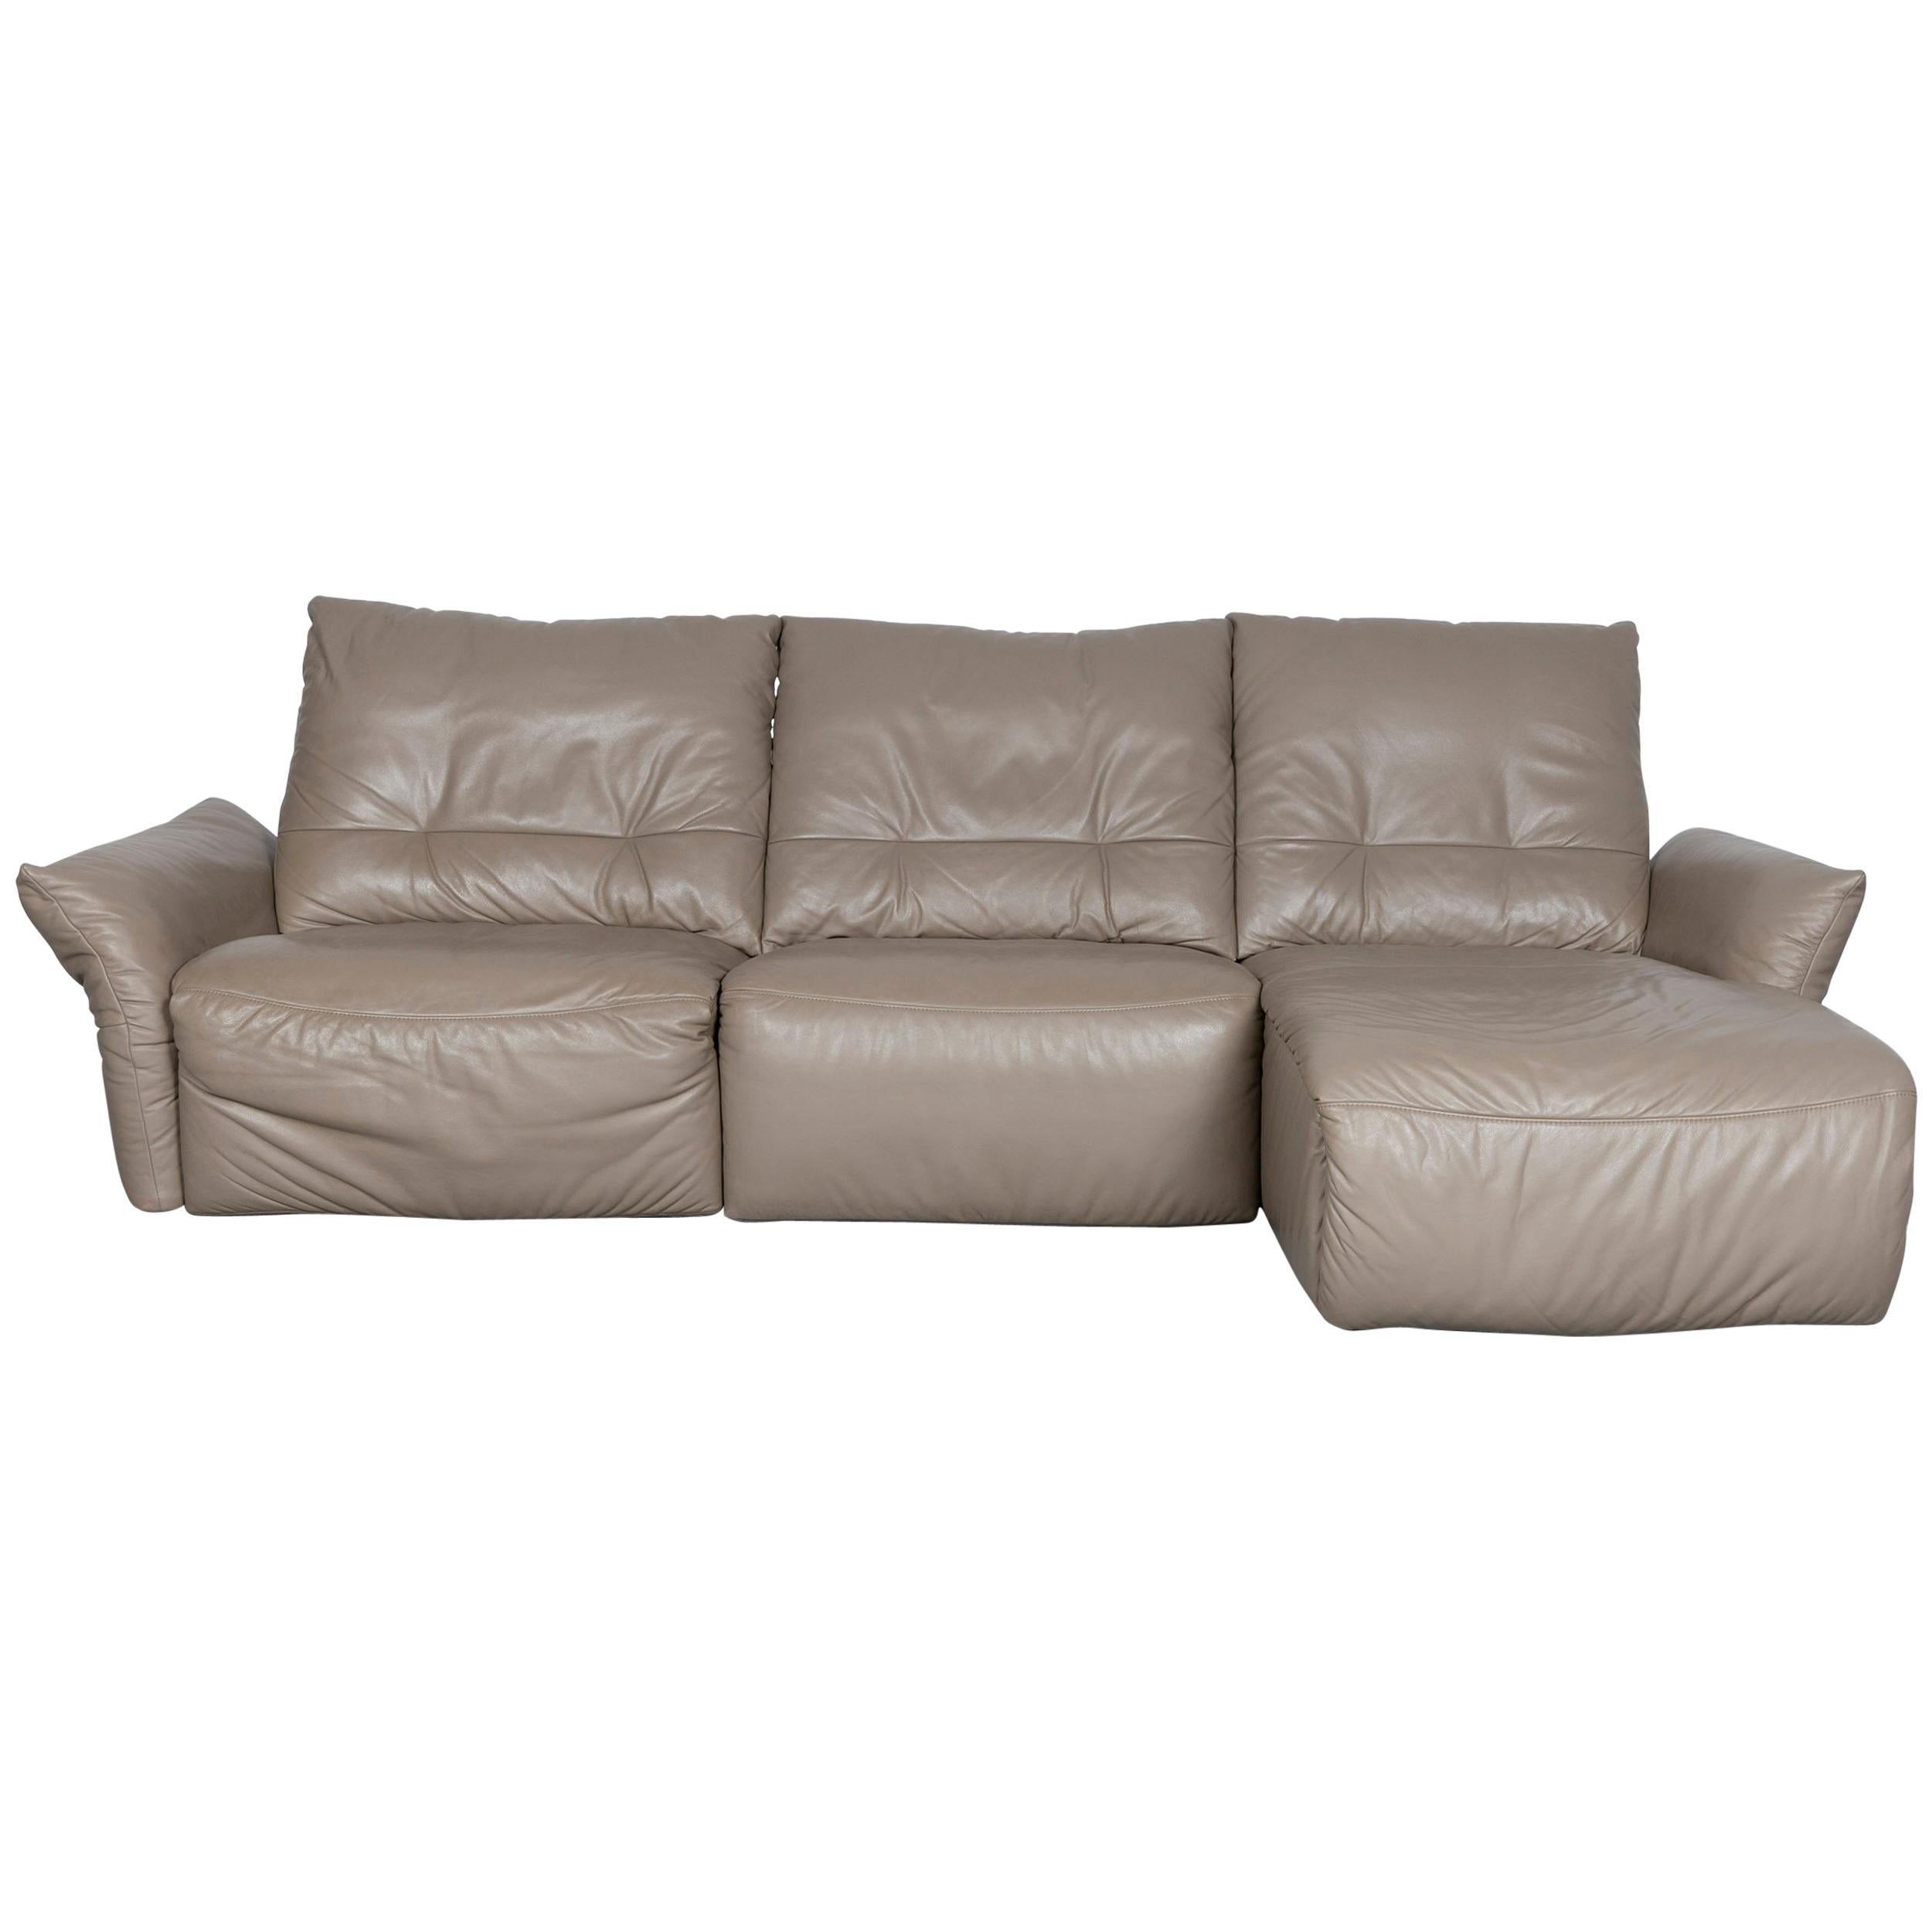 Ewald Schillig Designer Leather Corner-Sofa Grey with Function